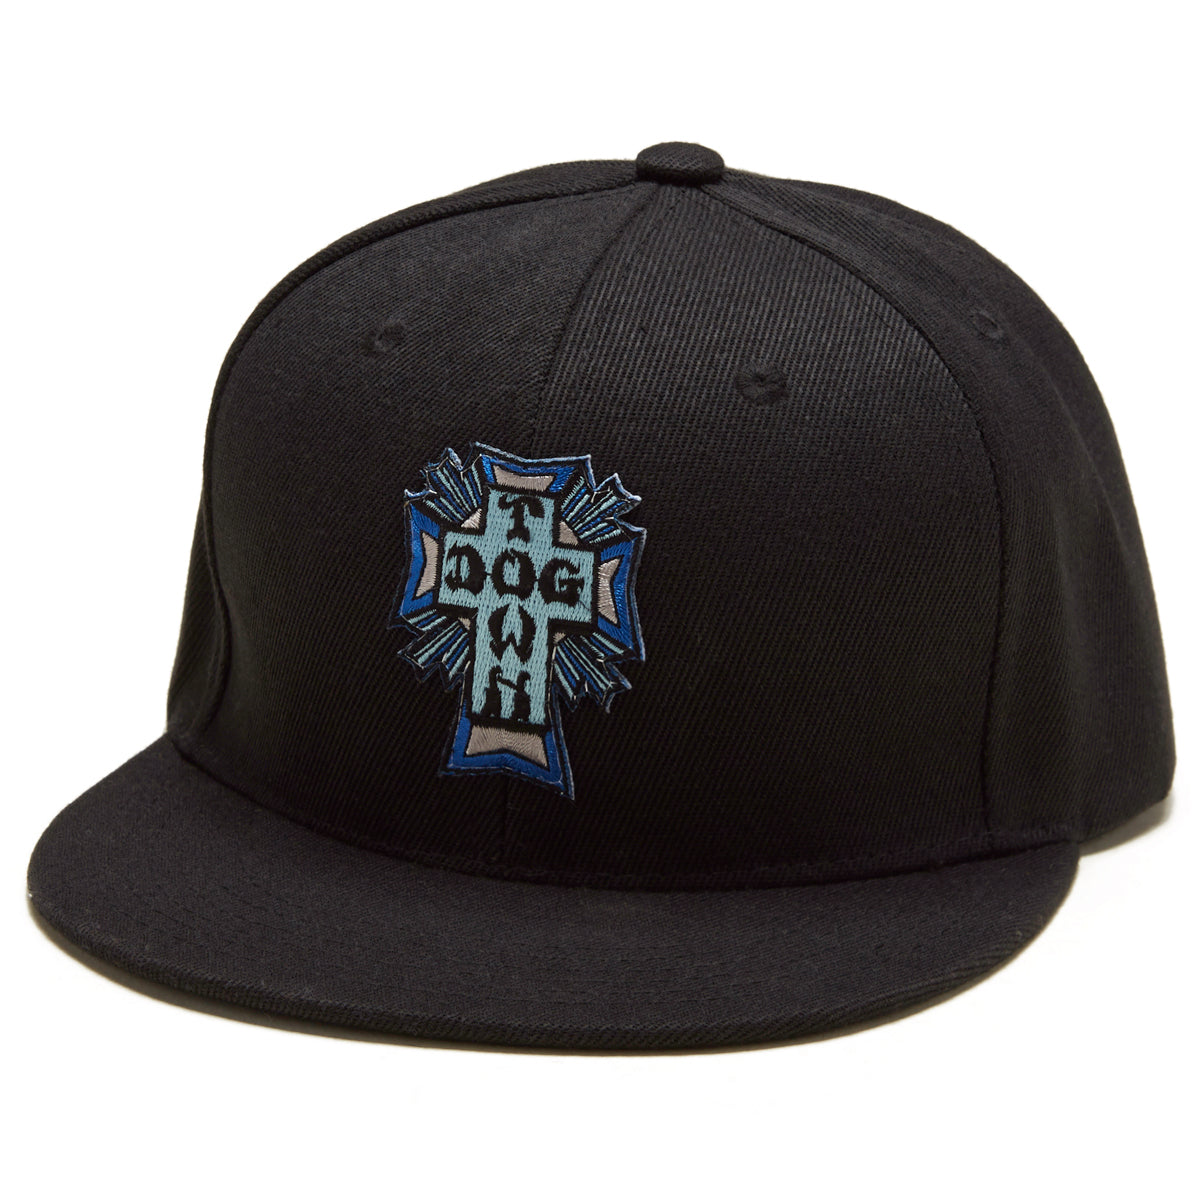 Dogtown Blue Cross Patch Snapback Hat - Black image 1